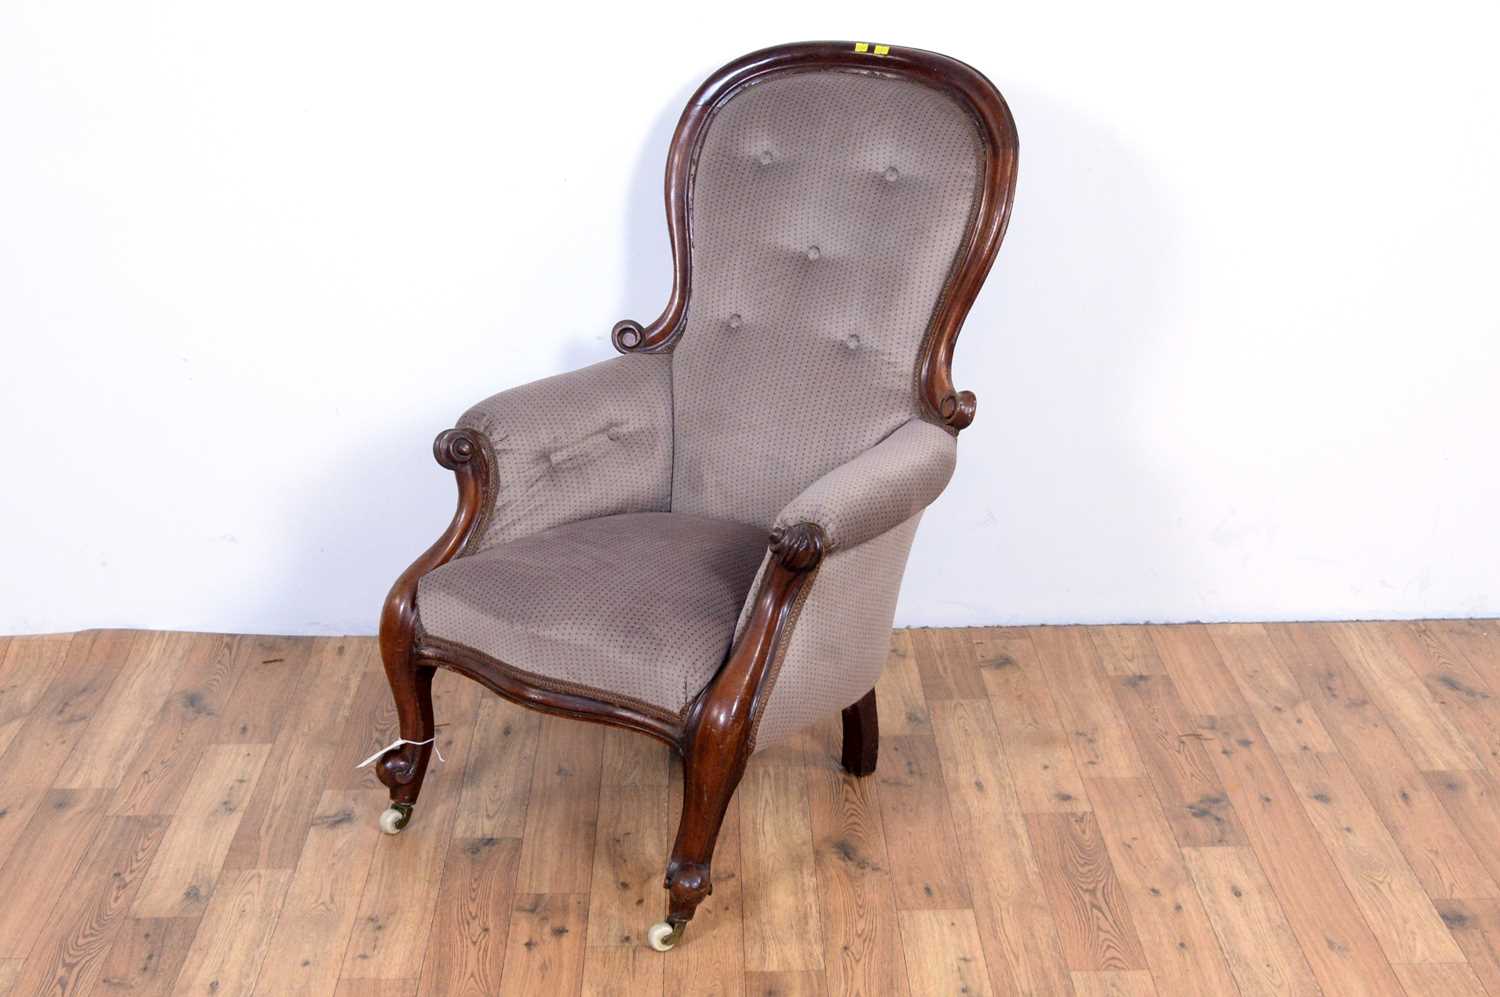 An Edwardian walnut framed spoon back easy chair